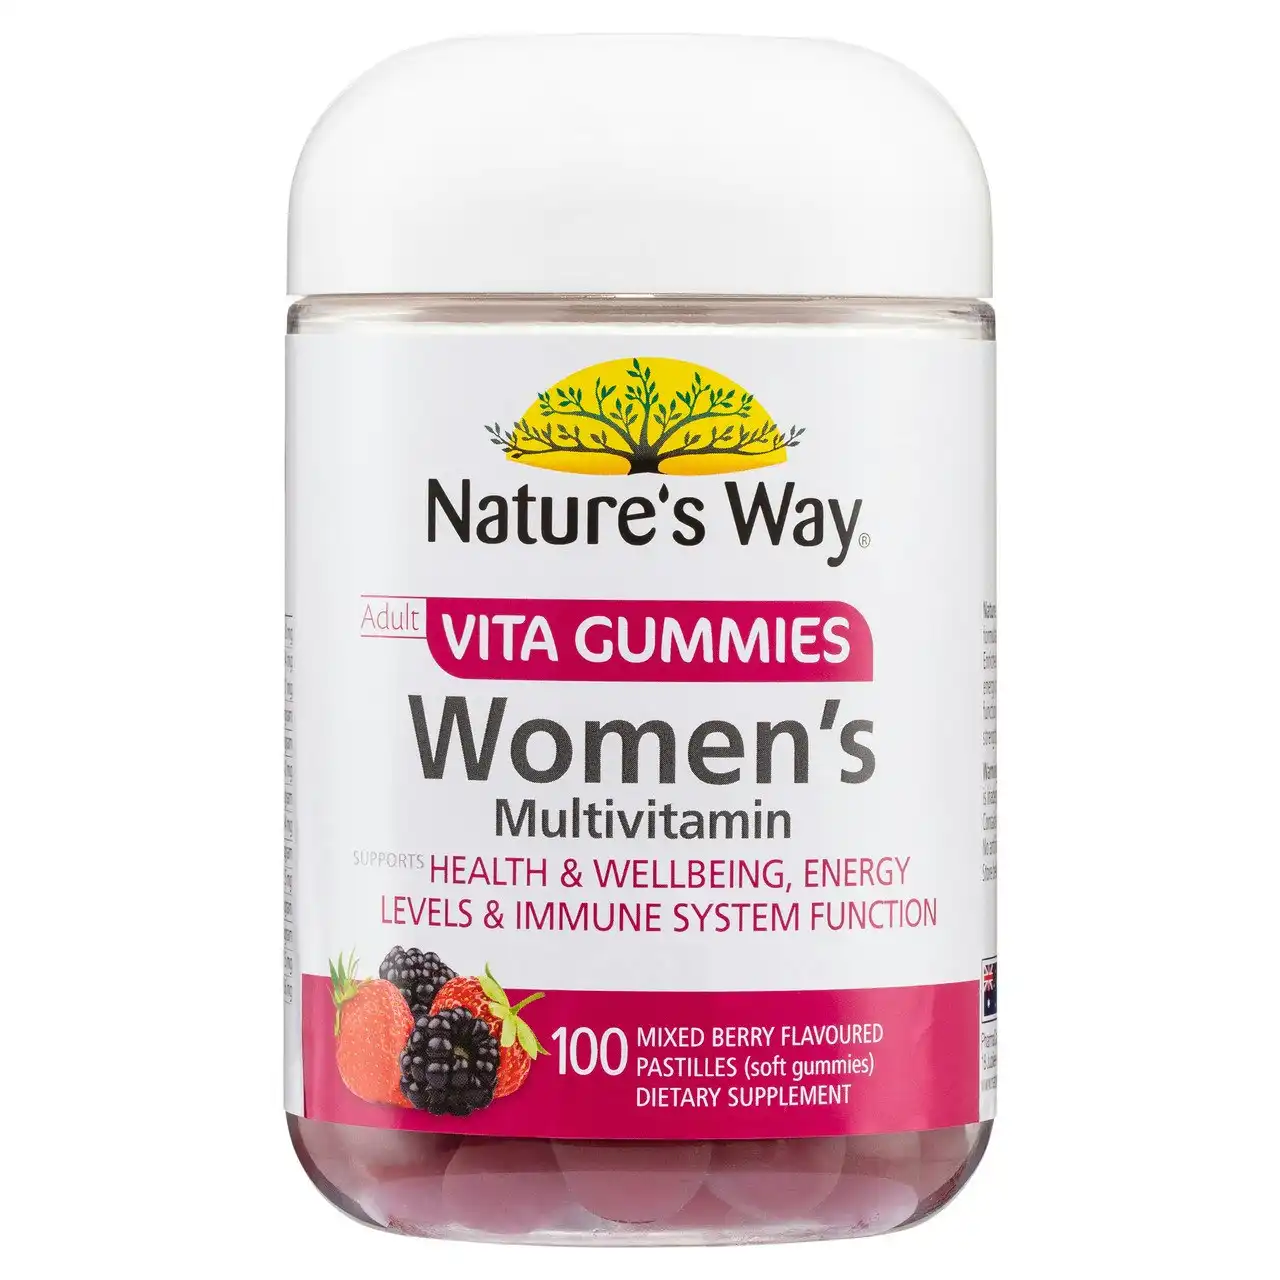 Nature's Way Adult Vita Gummies Women's Multivitamin 100's